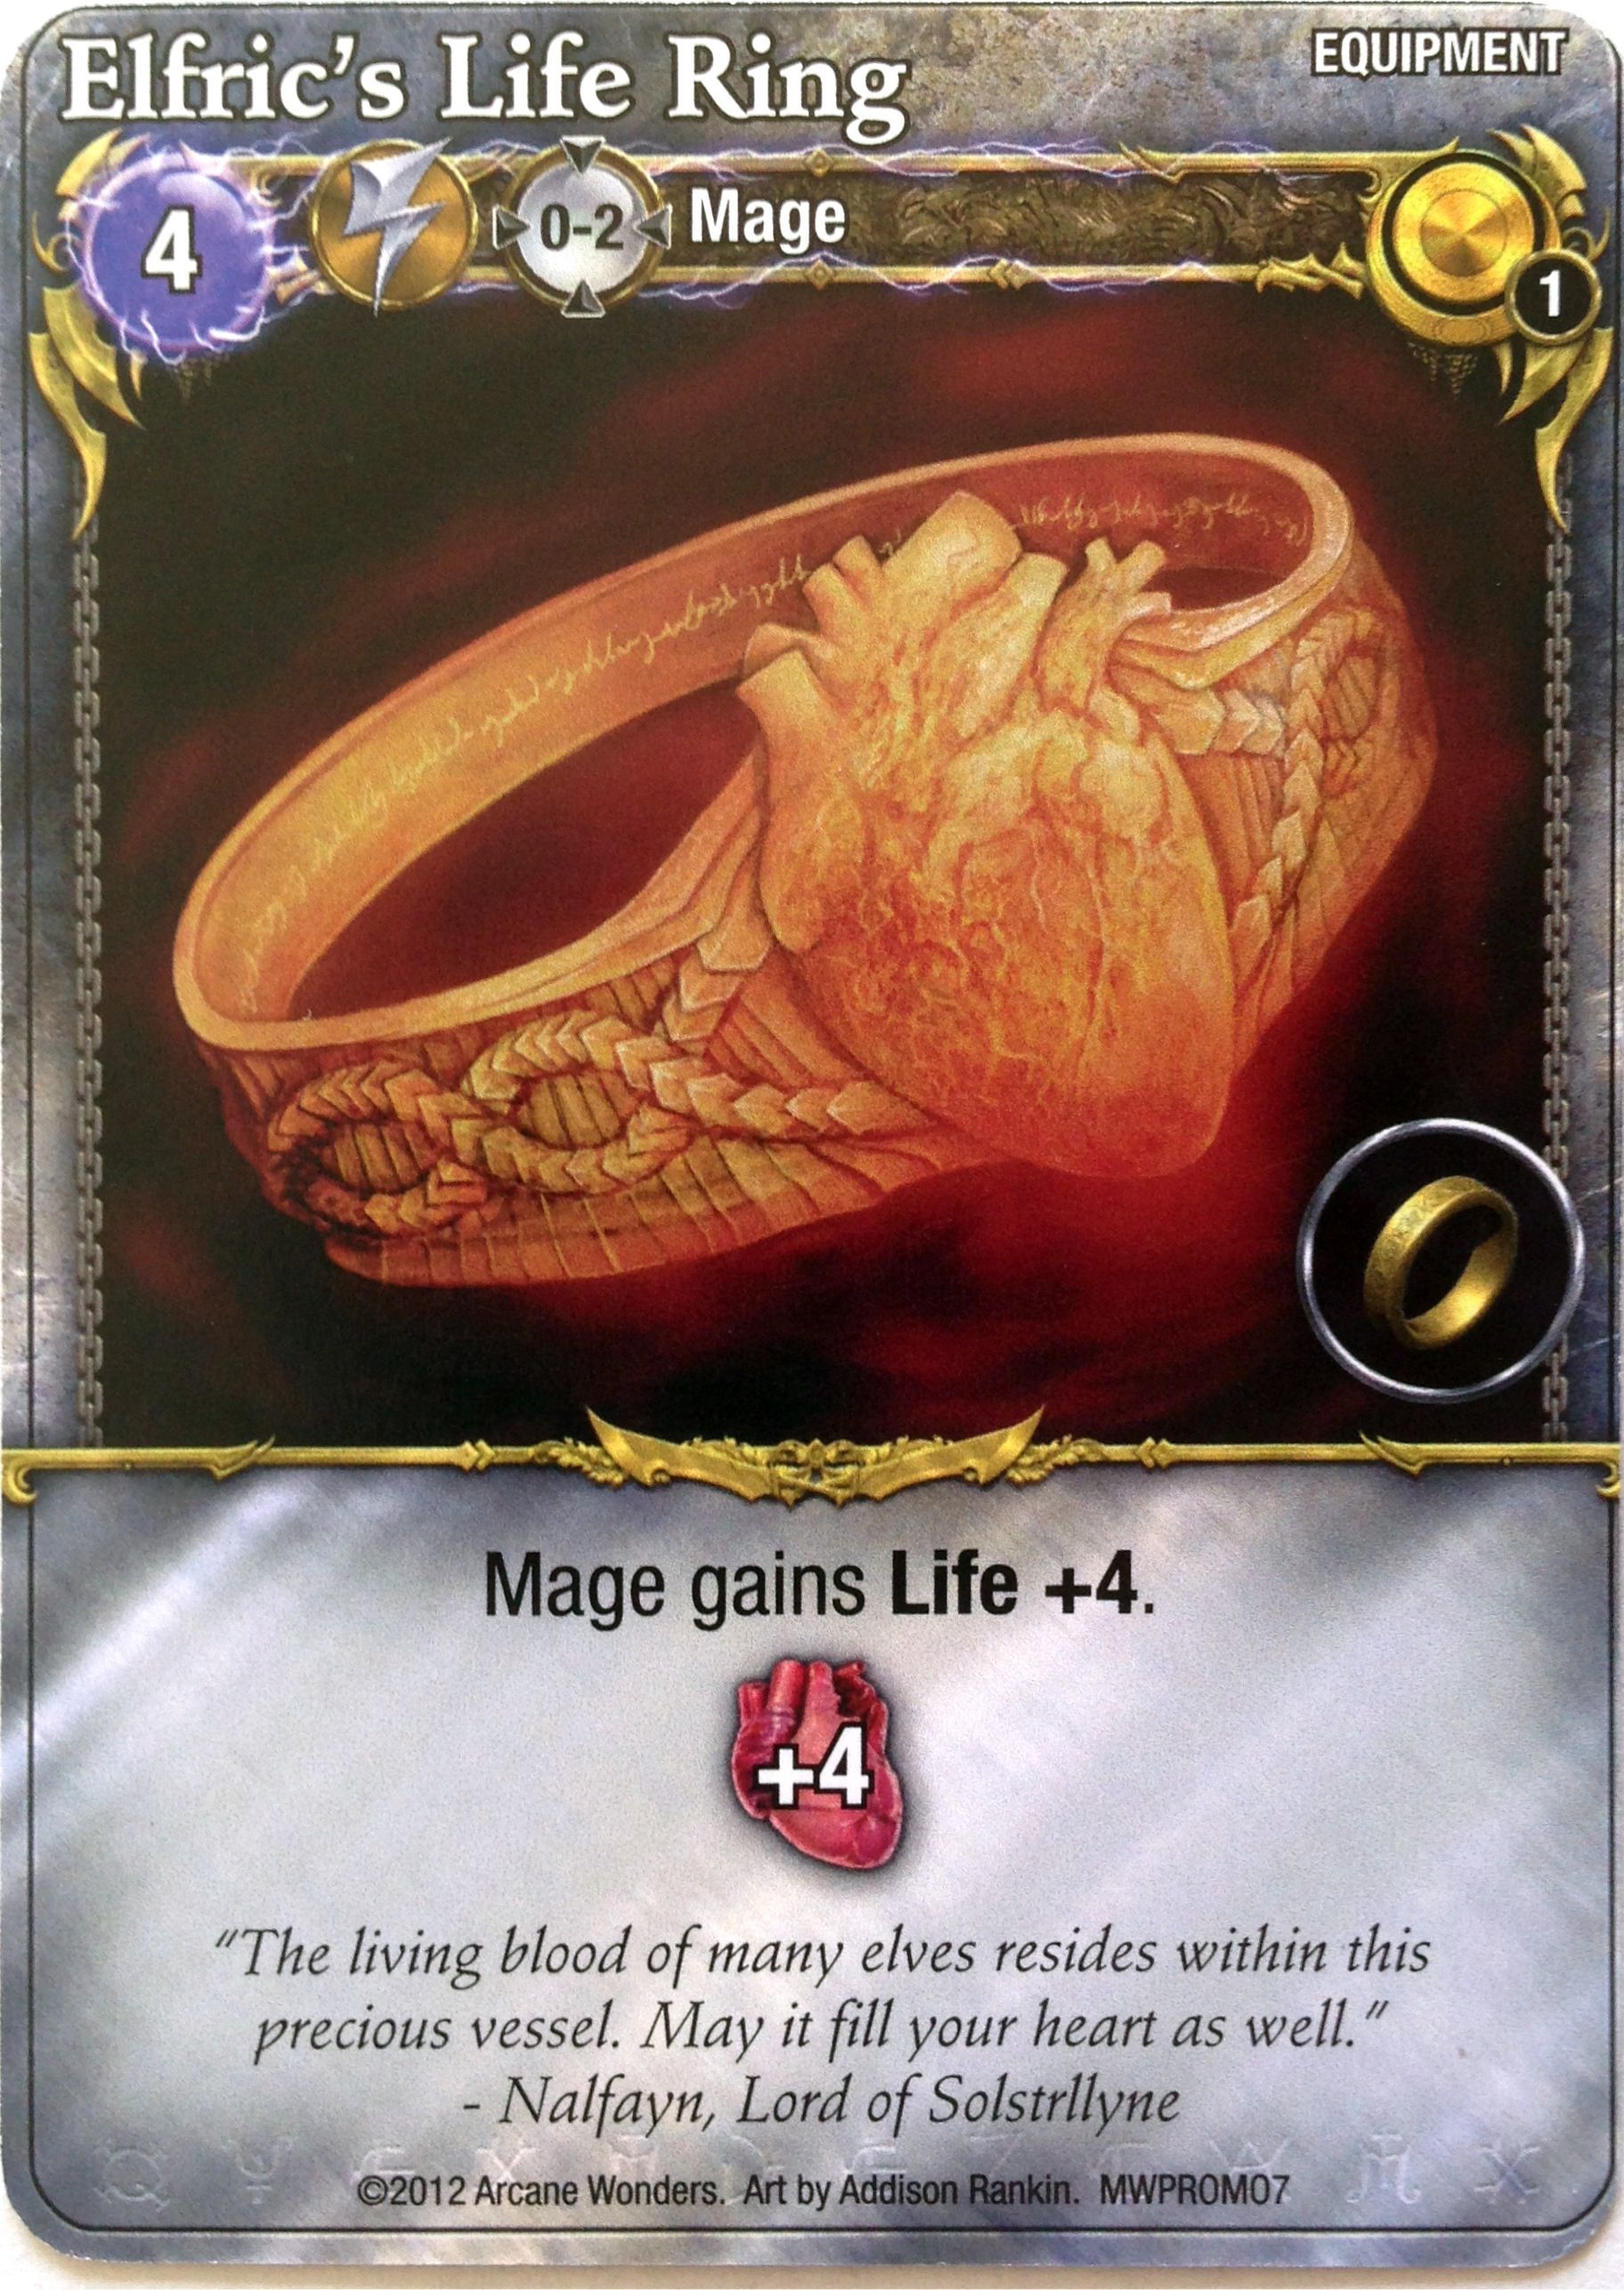 Mage Wars: Elfric's Life Ring Promo Card